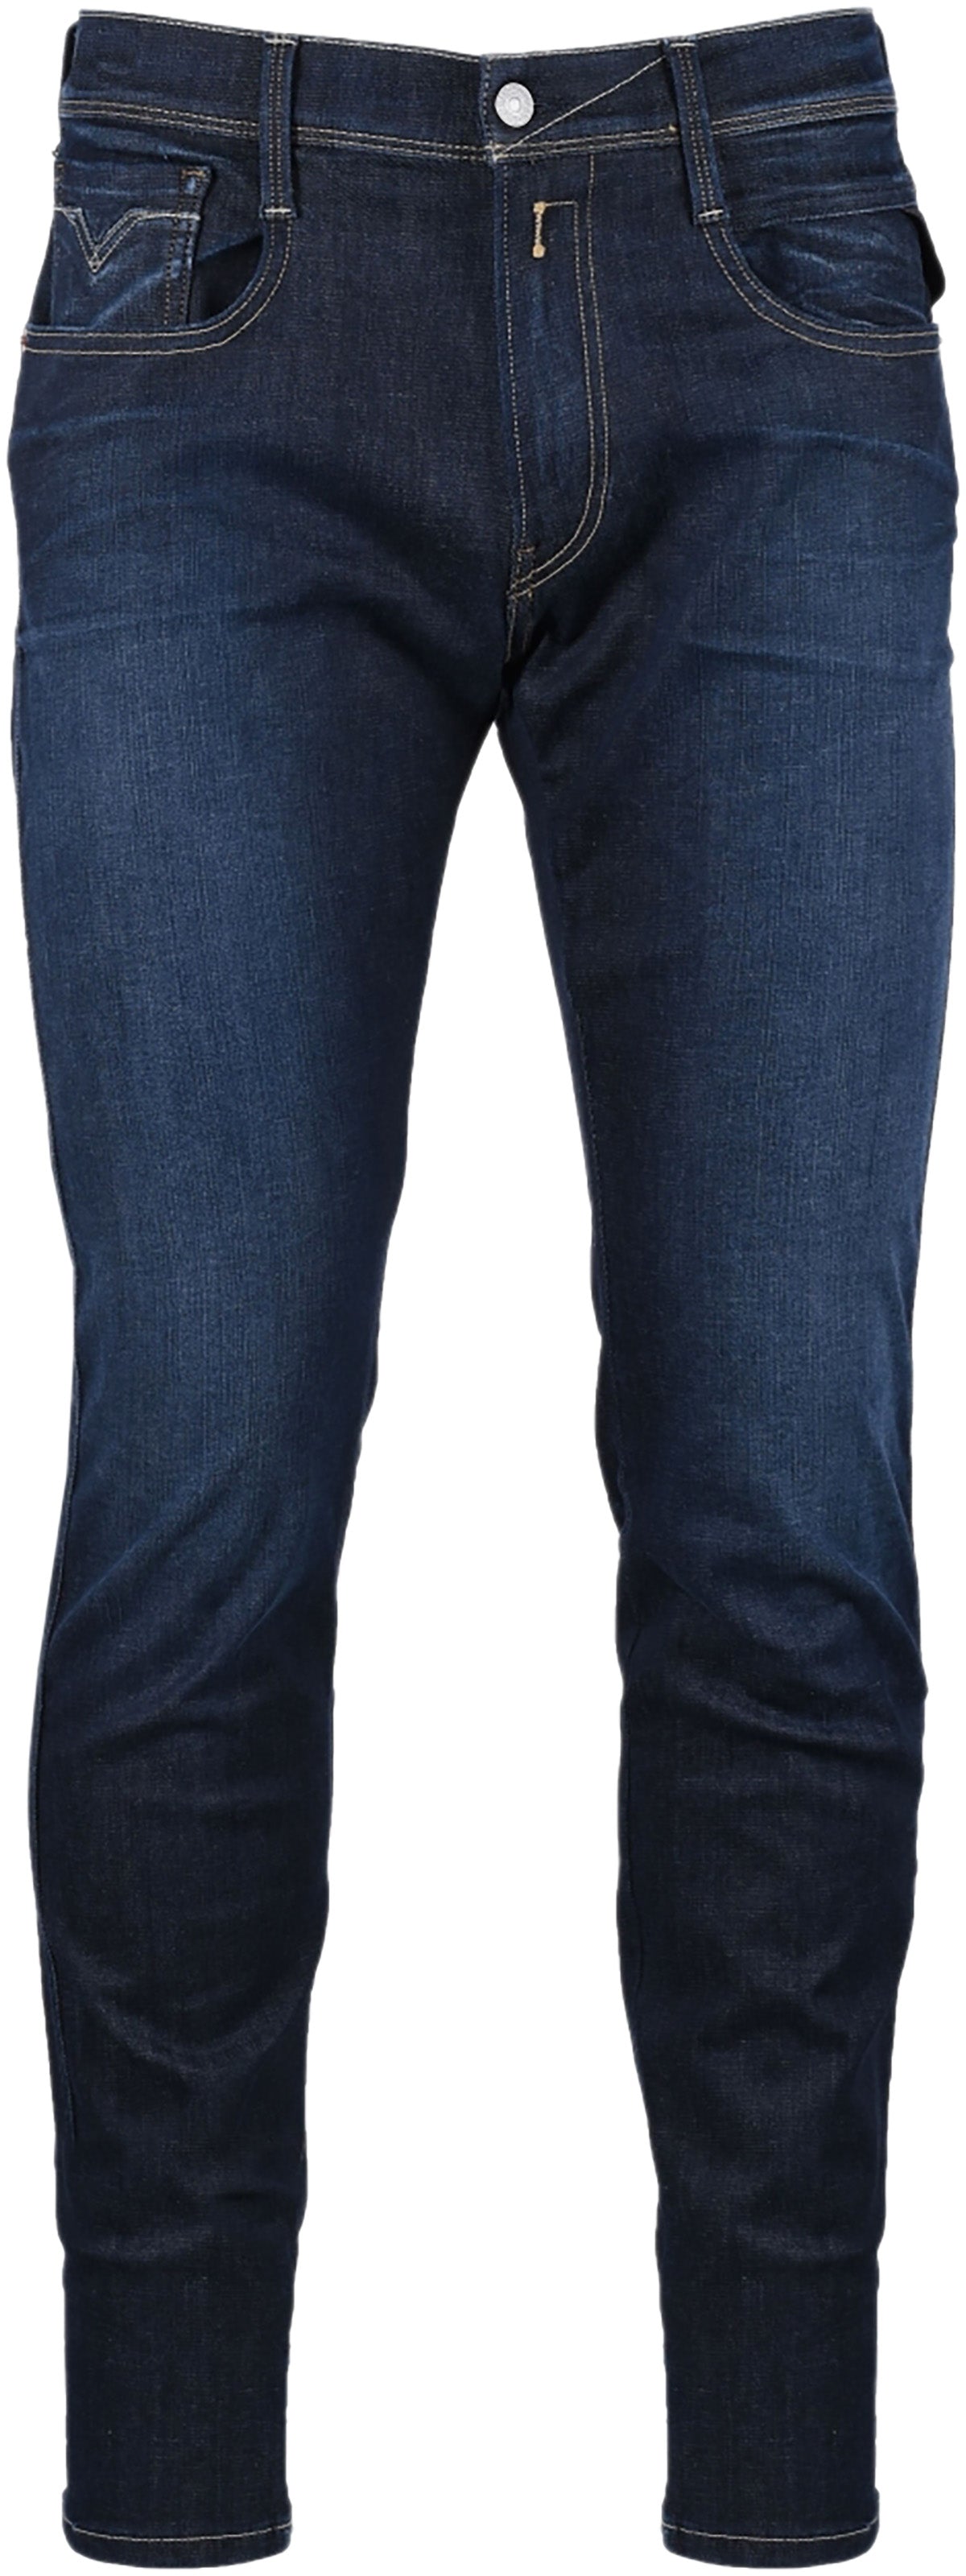 REPLAY Jeans regular slim fit in 010 light blue